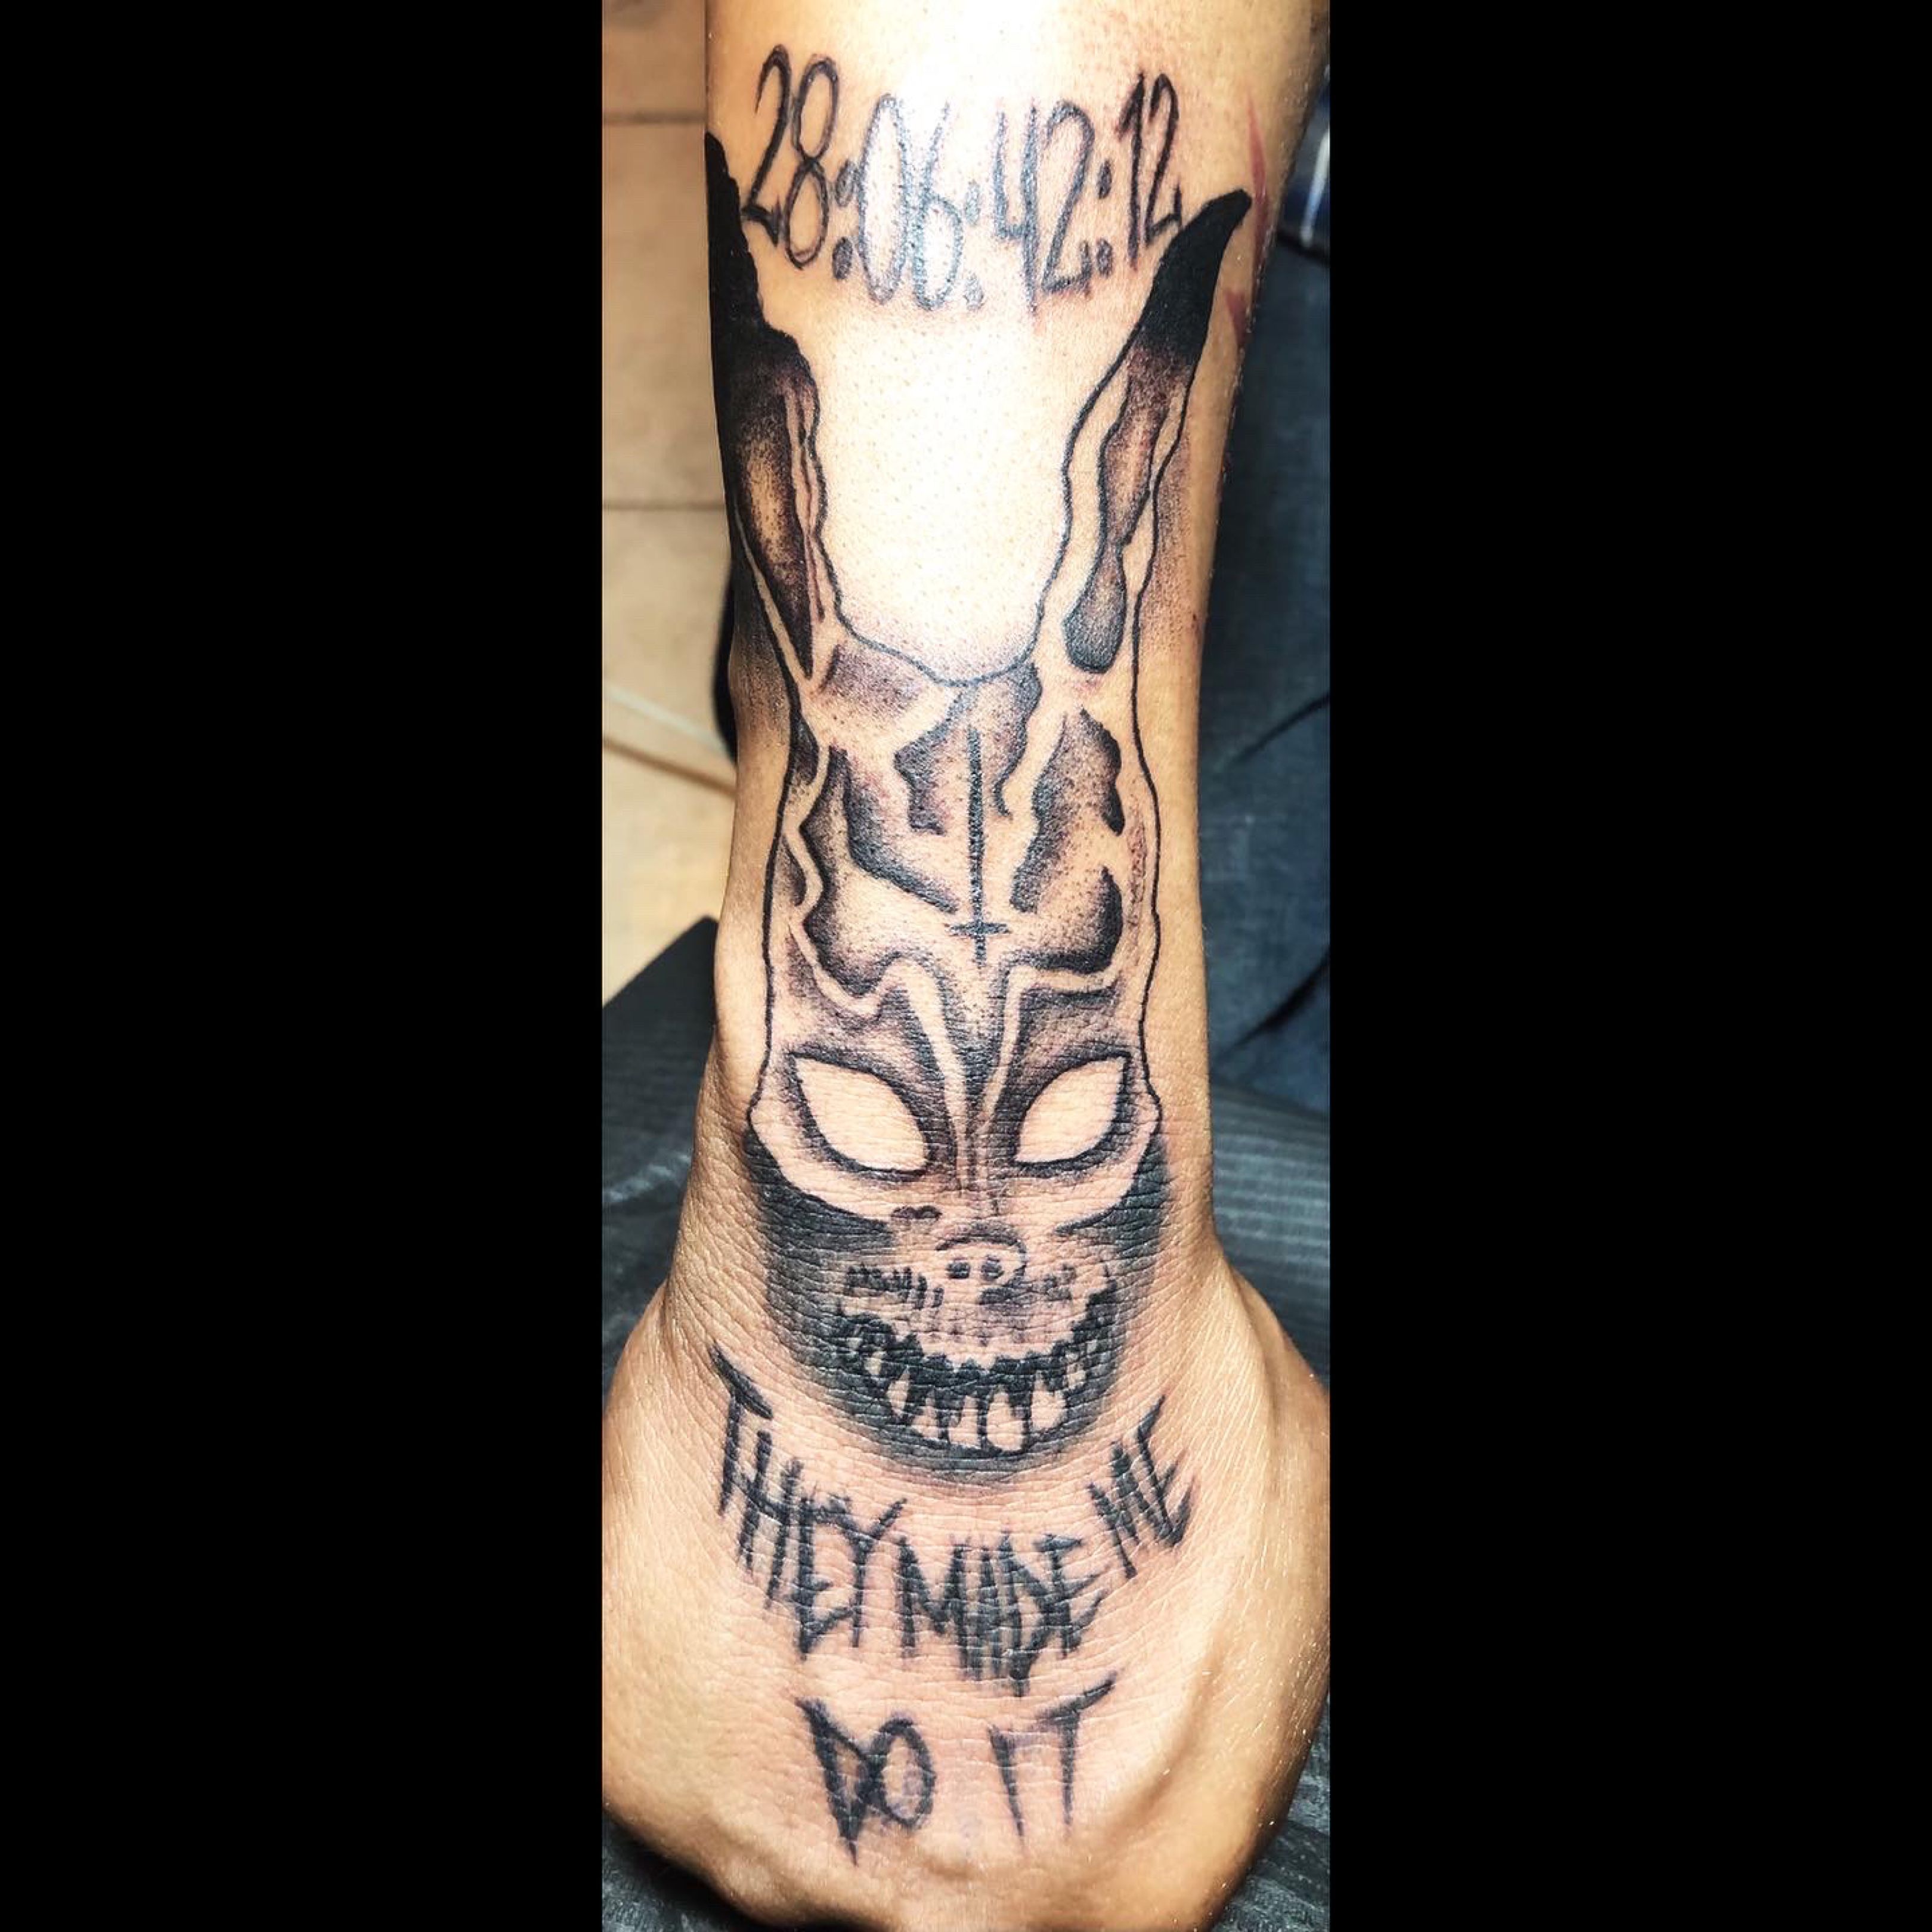 Evil bunny Donnie Darko tattoo by Elisa  Black Onyx Tattoo Studio